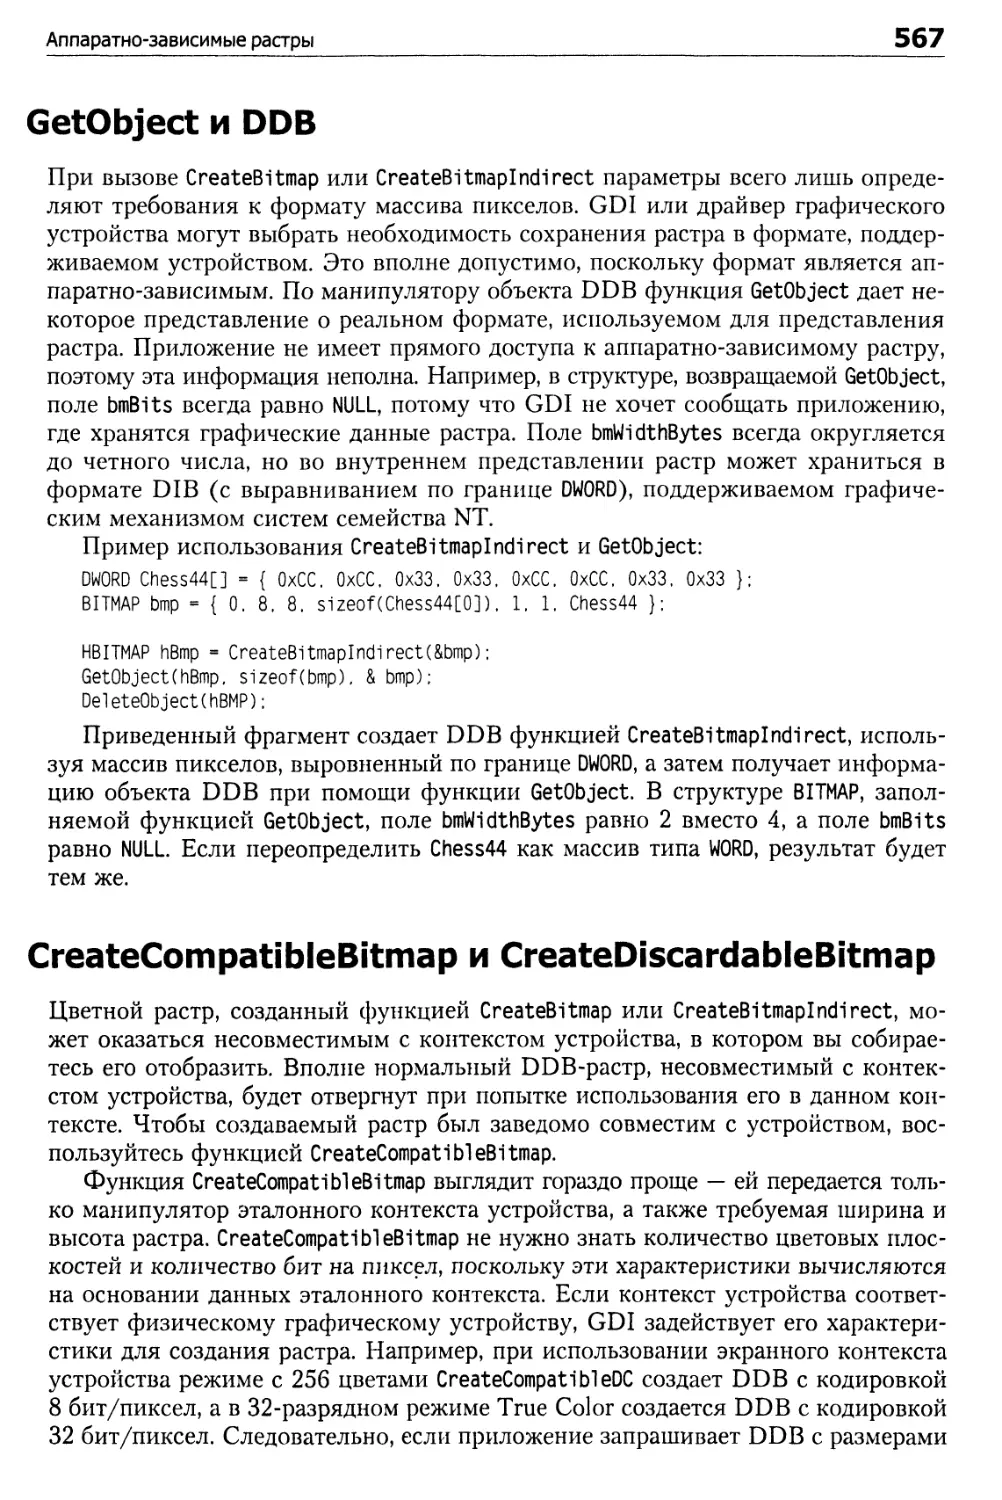 GetObject и DDB
CreateCompatibleBitmap и CreateDiscardableBitmap